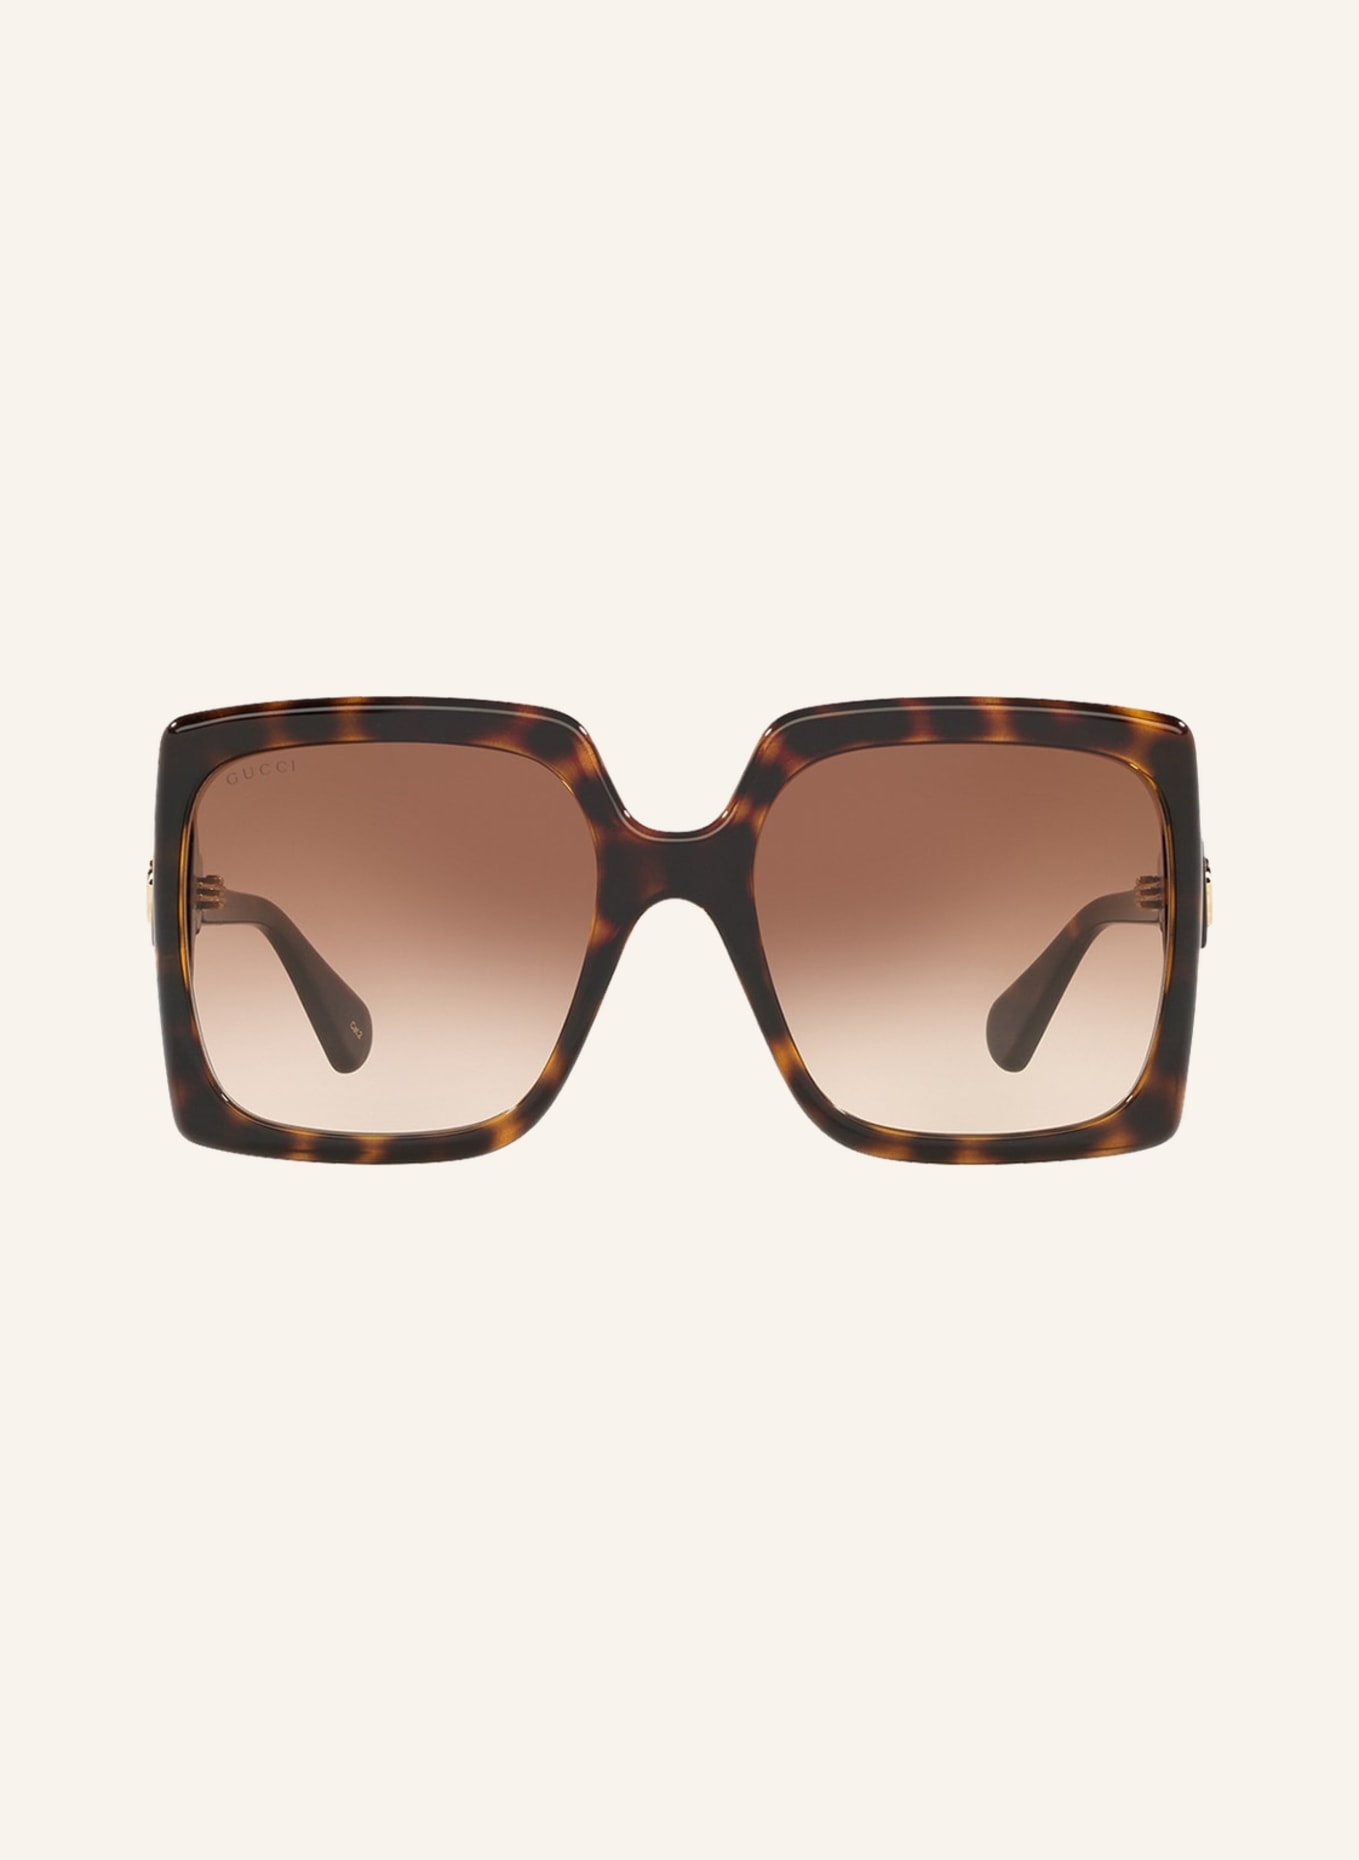 The Tinted Story | Half Rim Aviator Sunglasses | Men & Women | Large |  Austreet Oversized Sunglasses